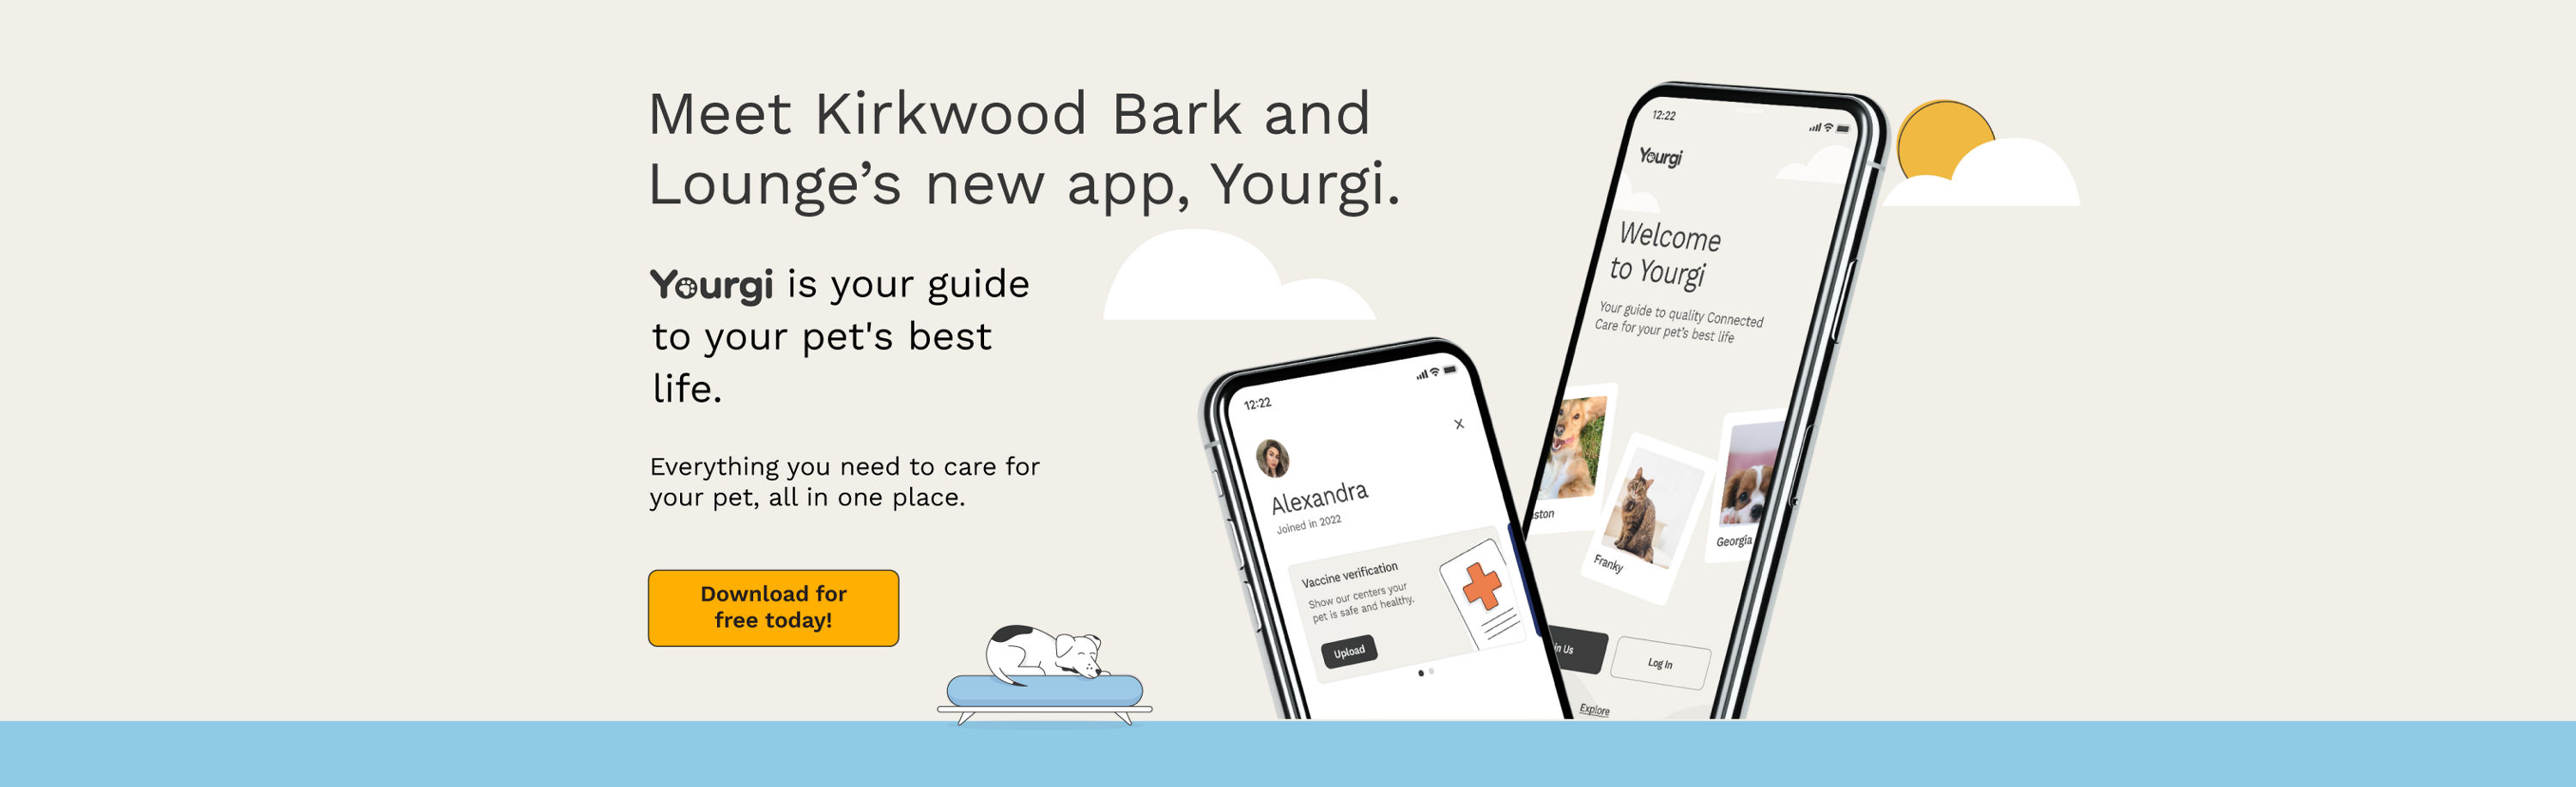 Meet Kirkwood Bark and Lounge's new app, Yourgi.